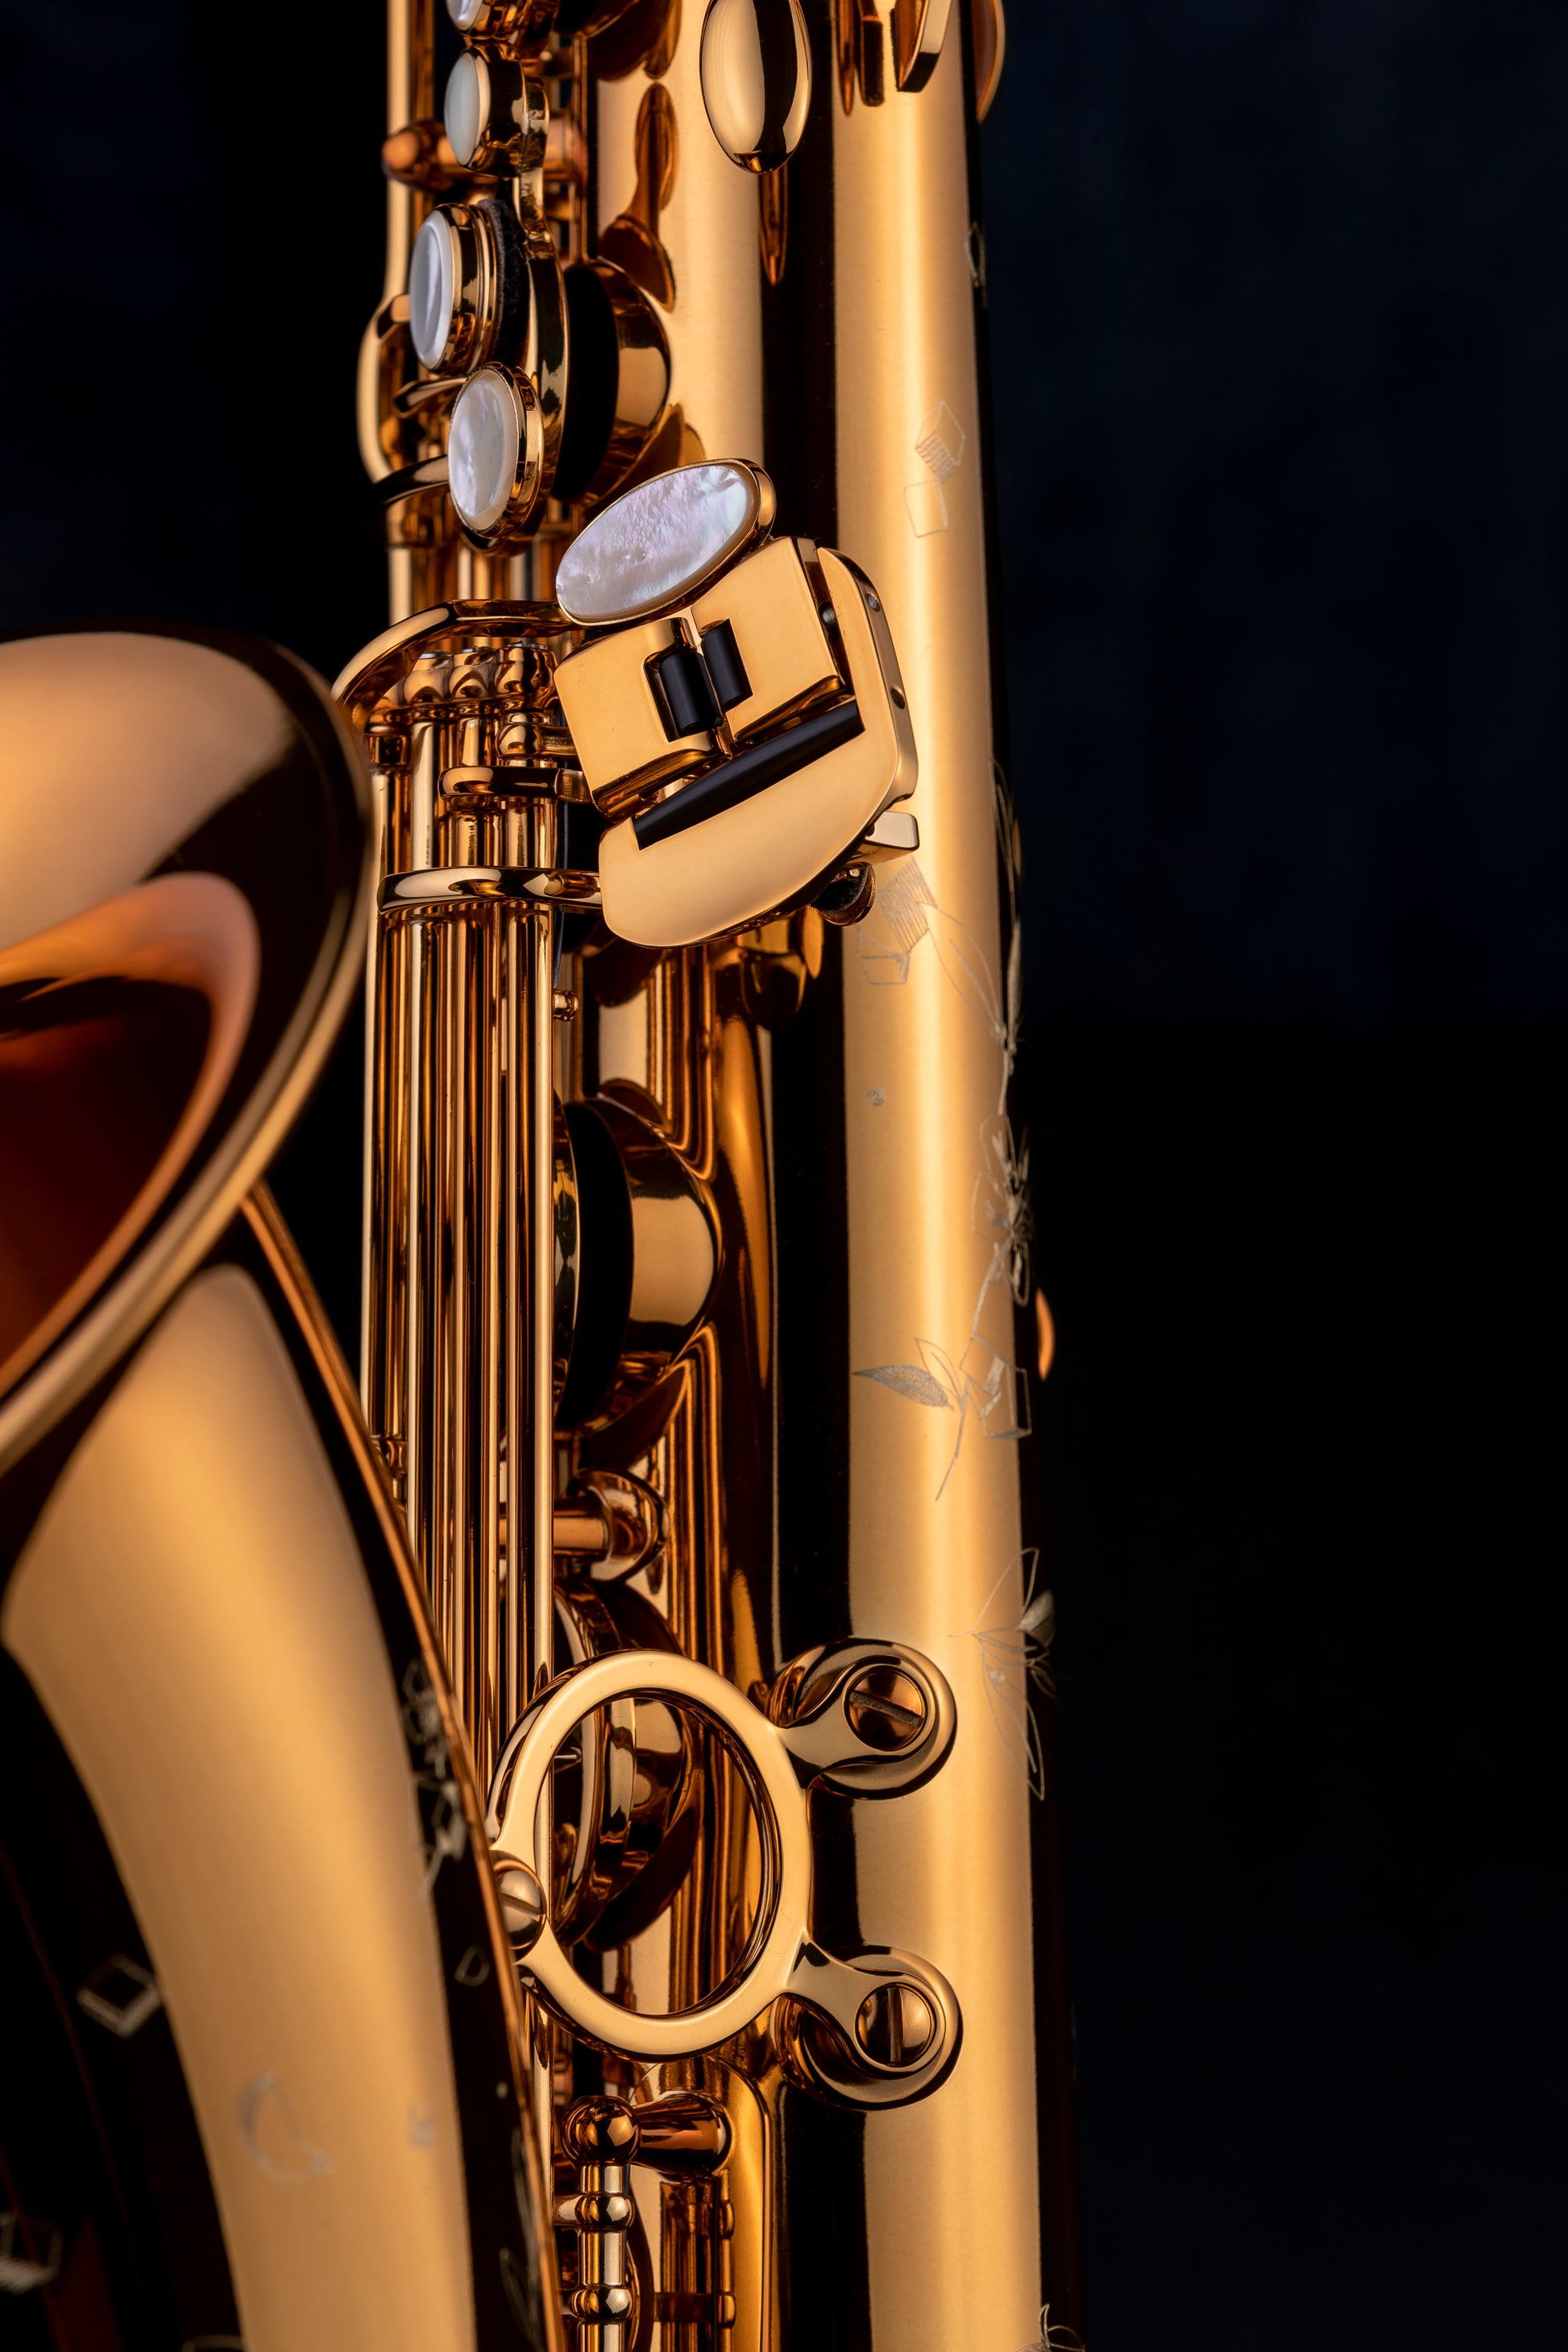 Henri SELMER Paris - Supreme tenor saxophone